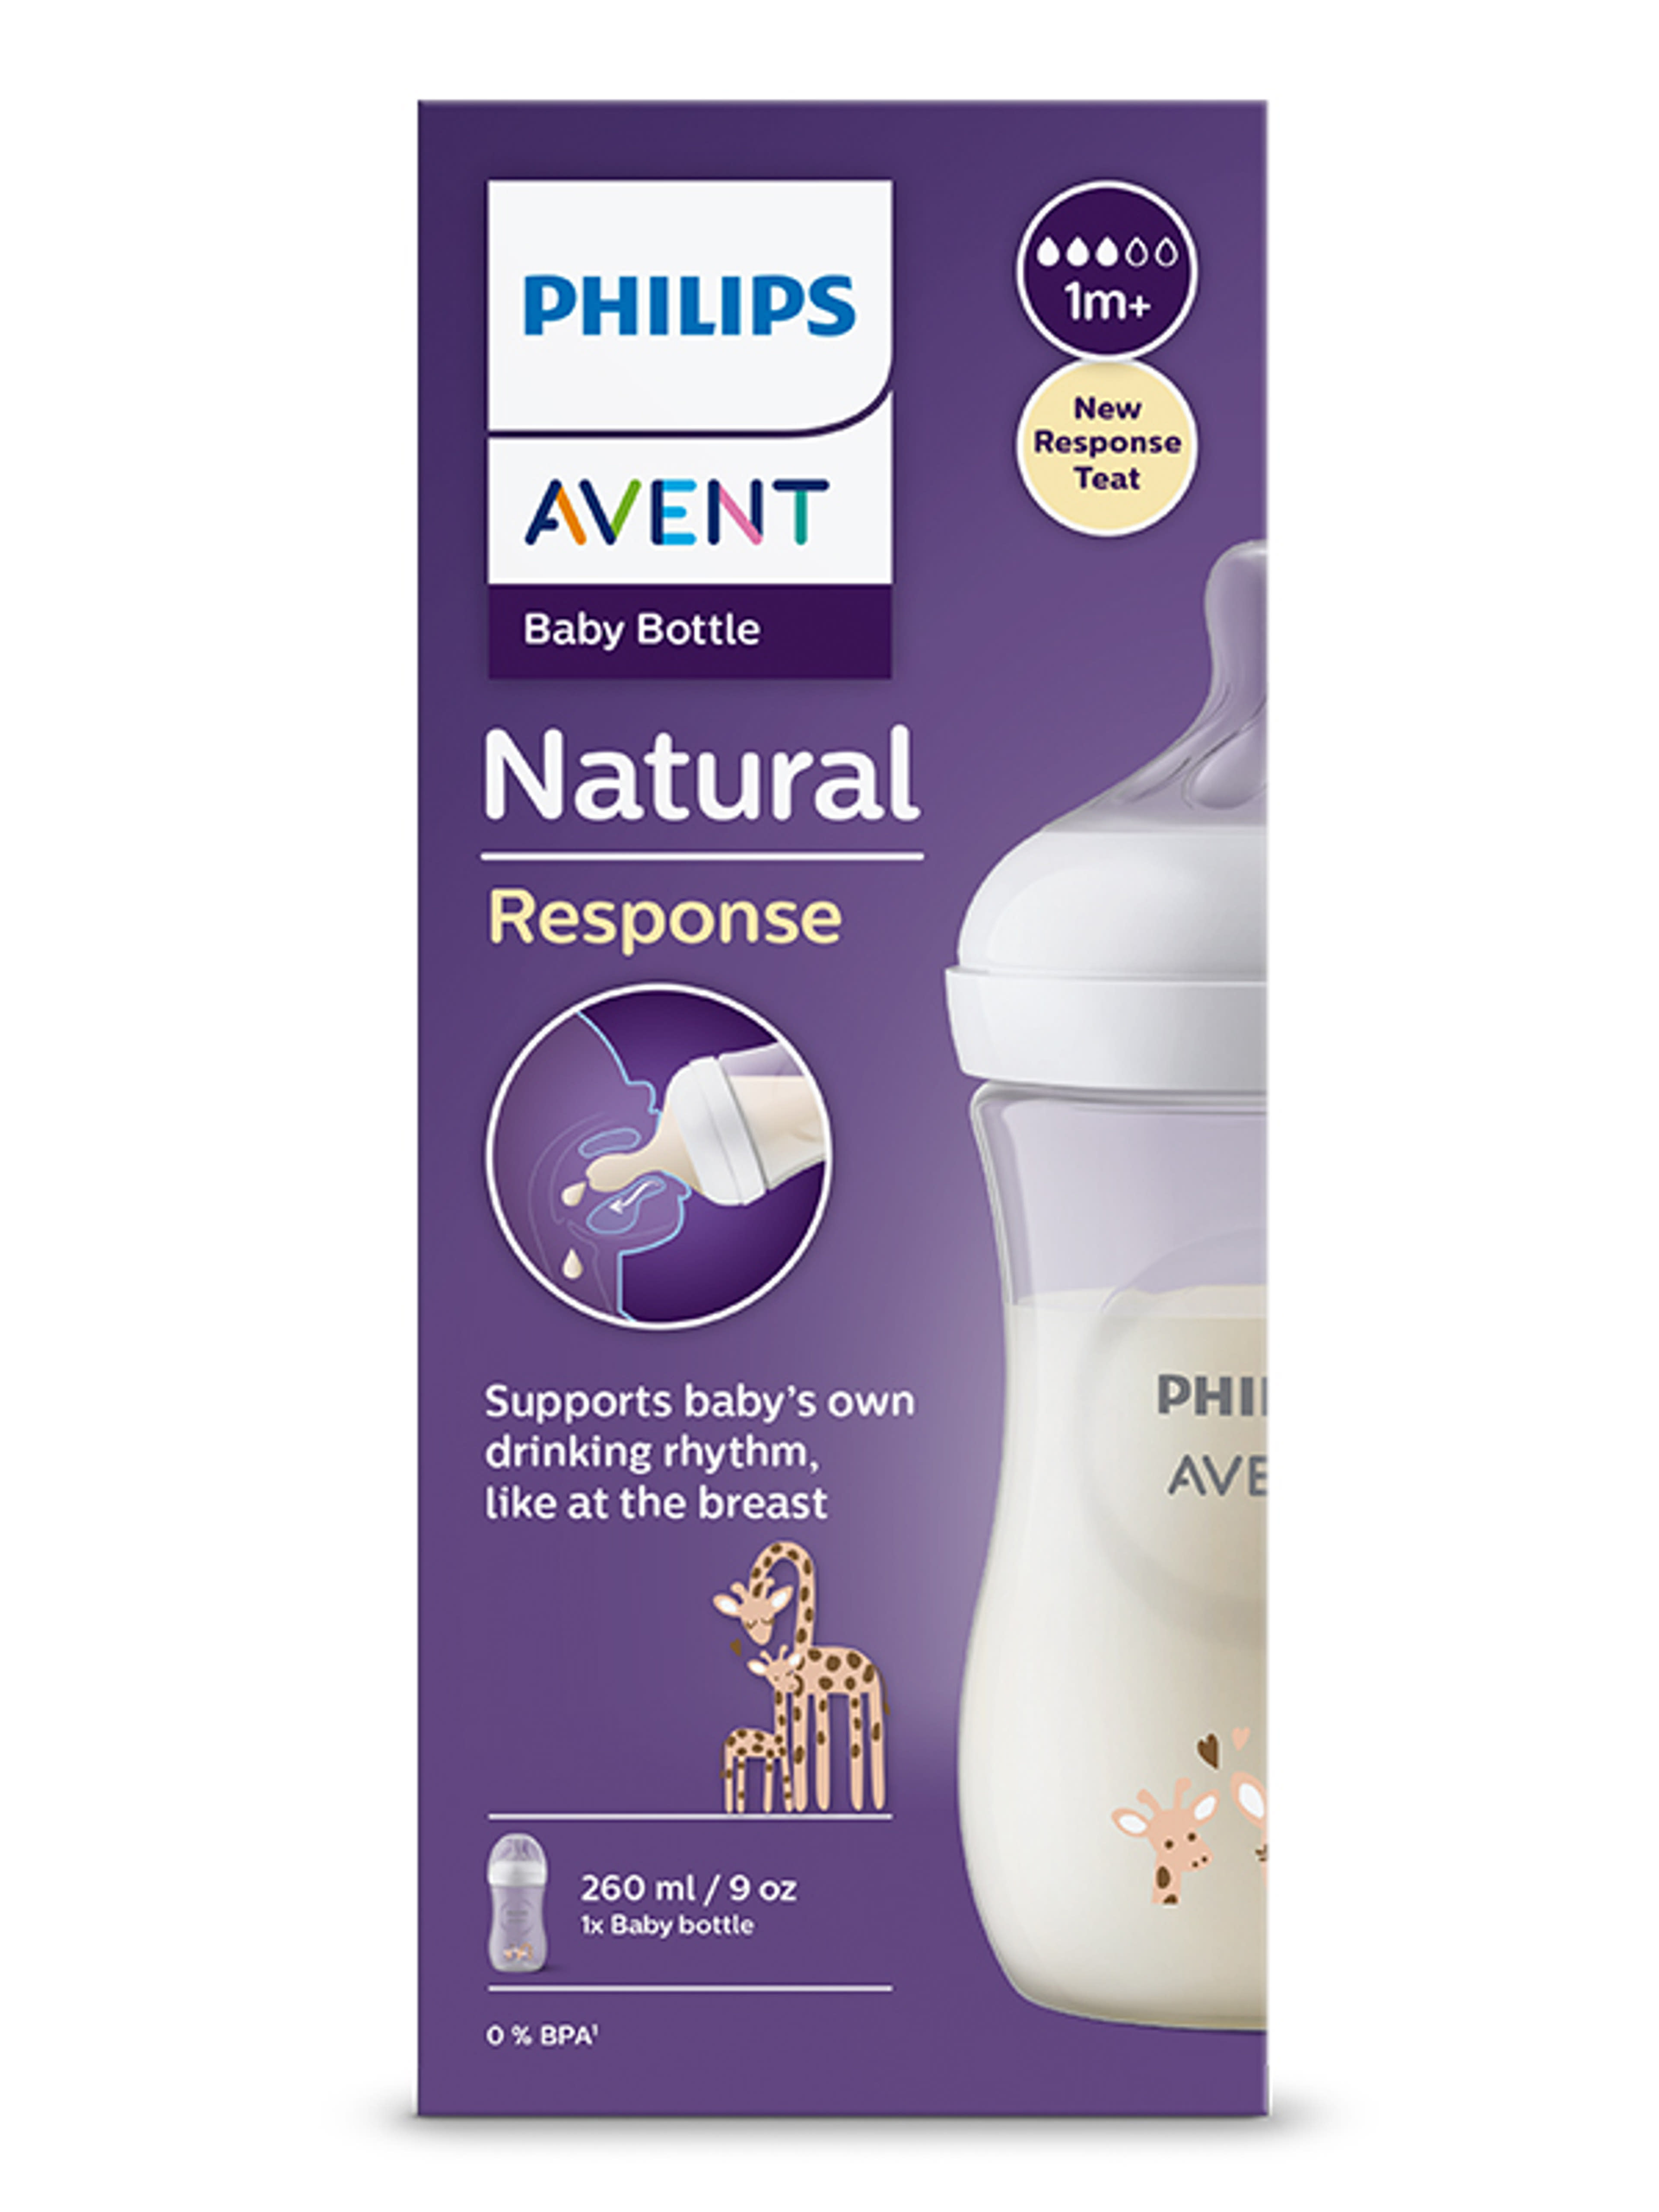 Philips Avent Natural Response cumisüveg 3 hónapos kortól 260 ml - 1 db